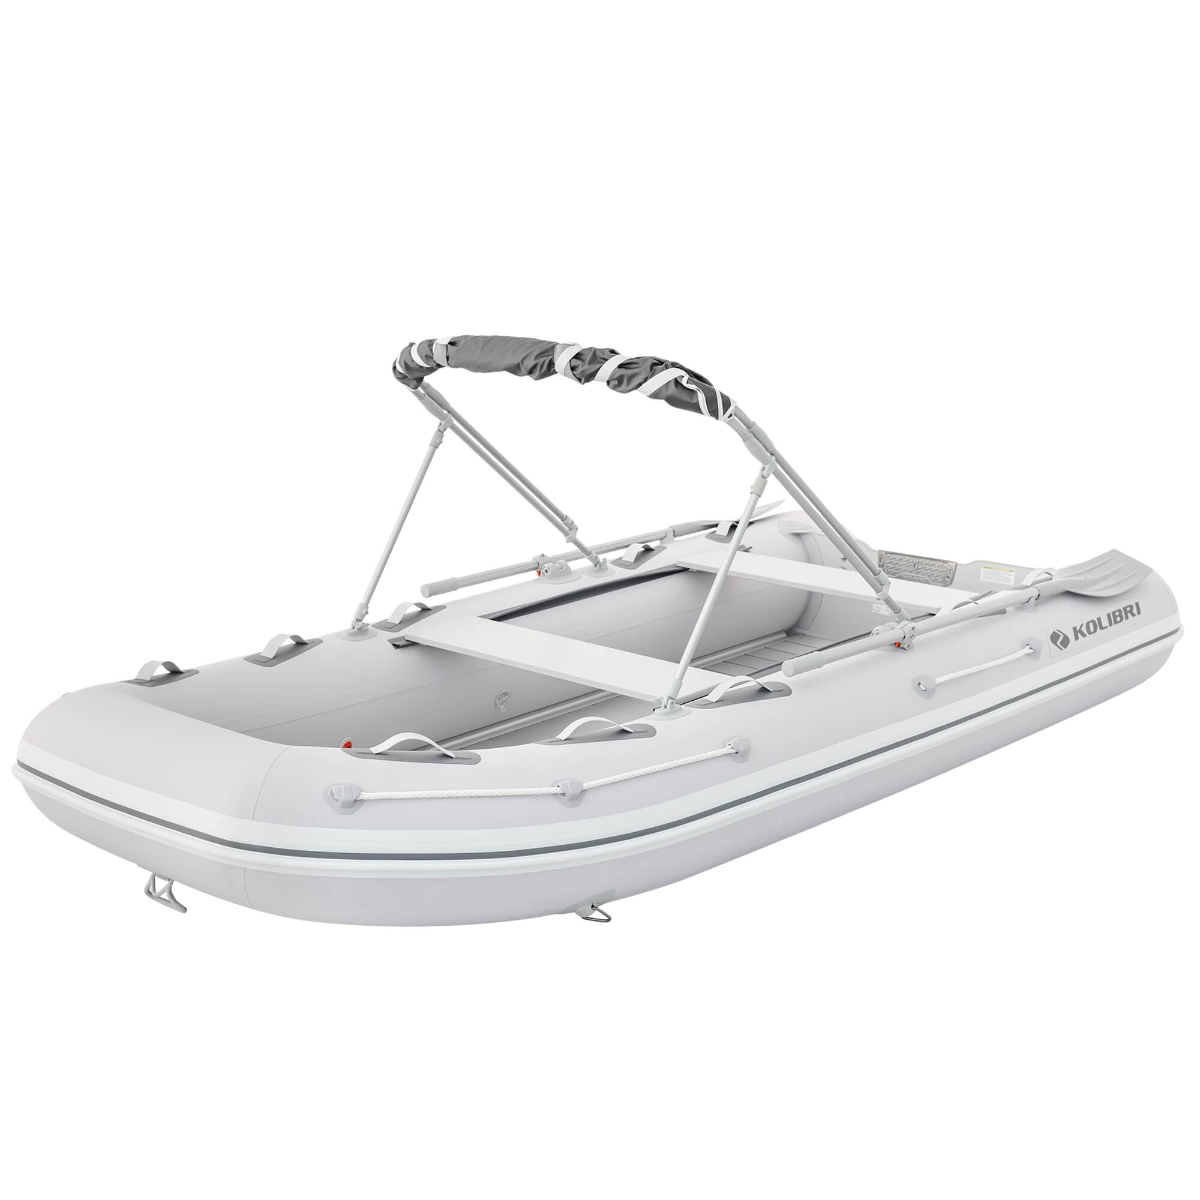 Inflatable boat Bimini top - Powder-coasted - NVequipment - cockpit /  aluminum frame / leather